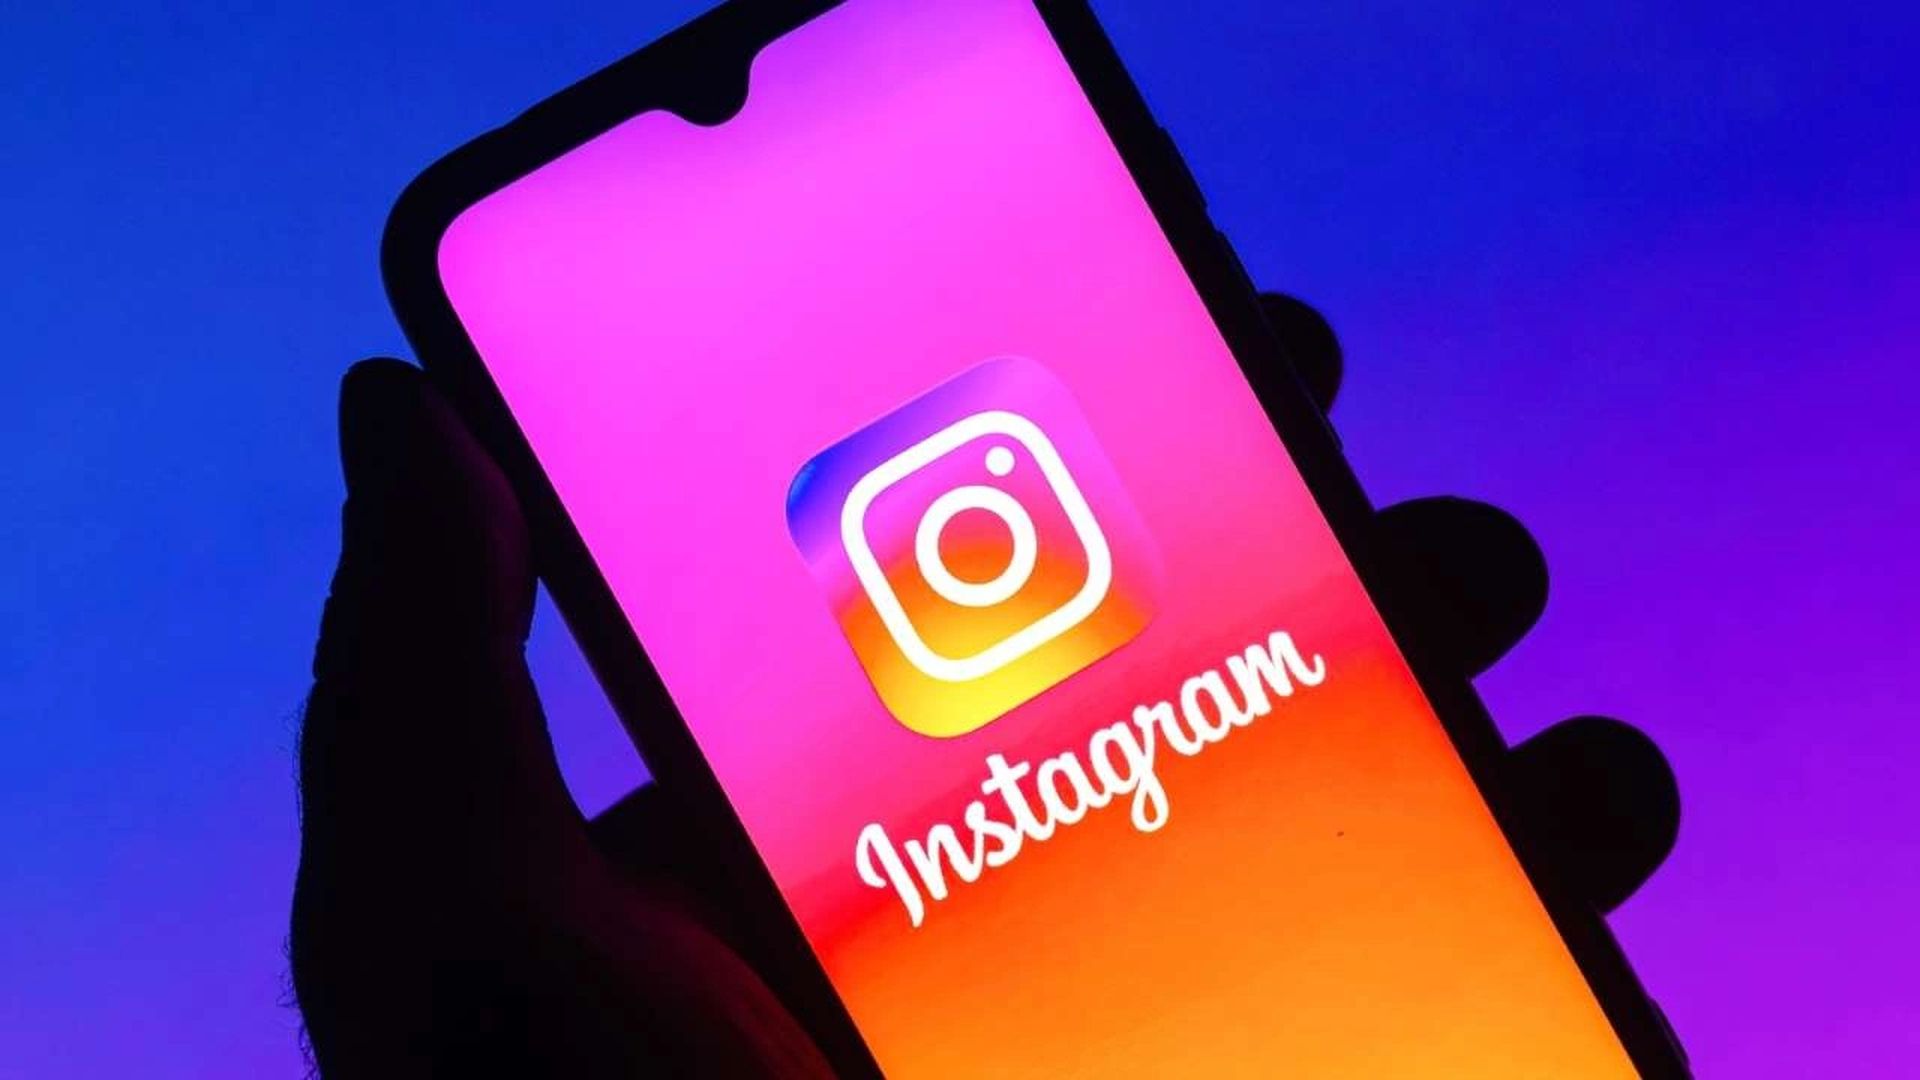 Instagram keeps crashing: How to fix it?